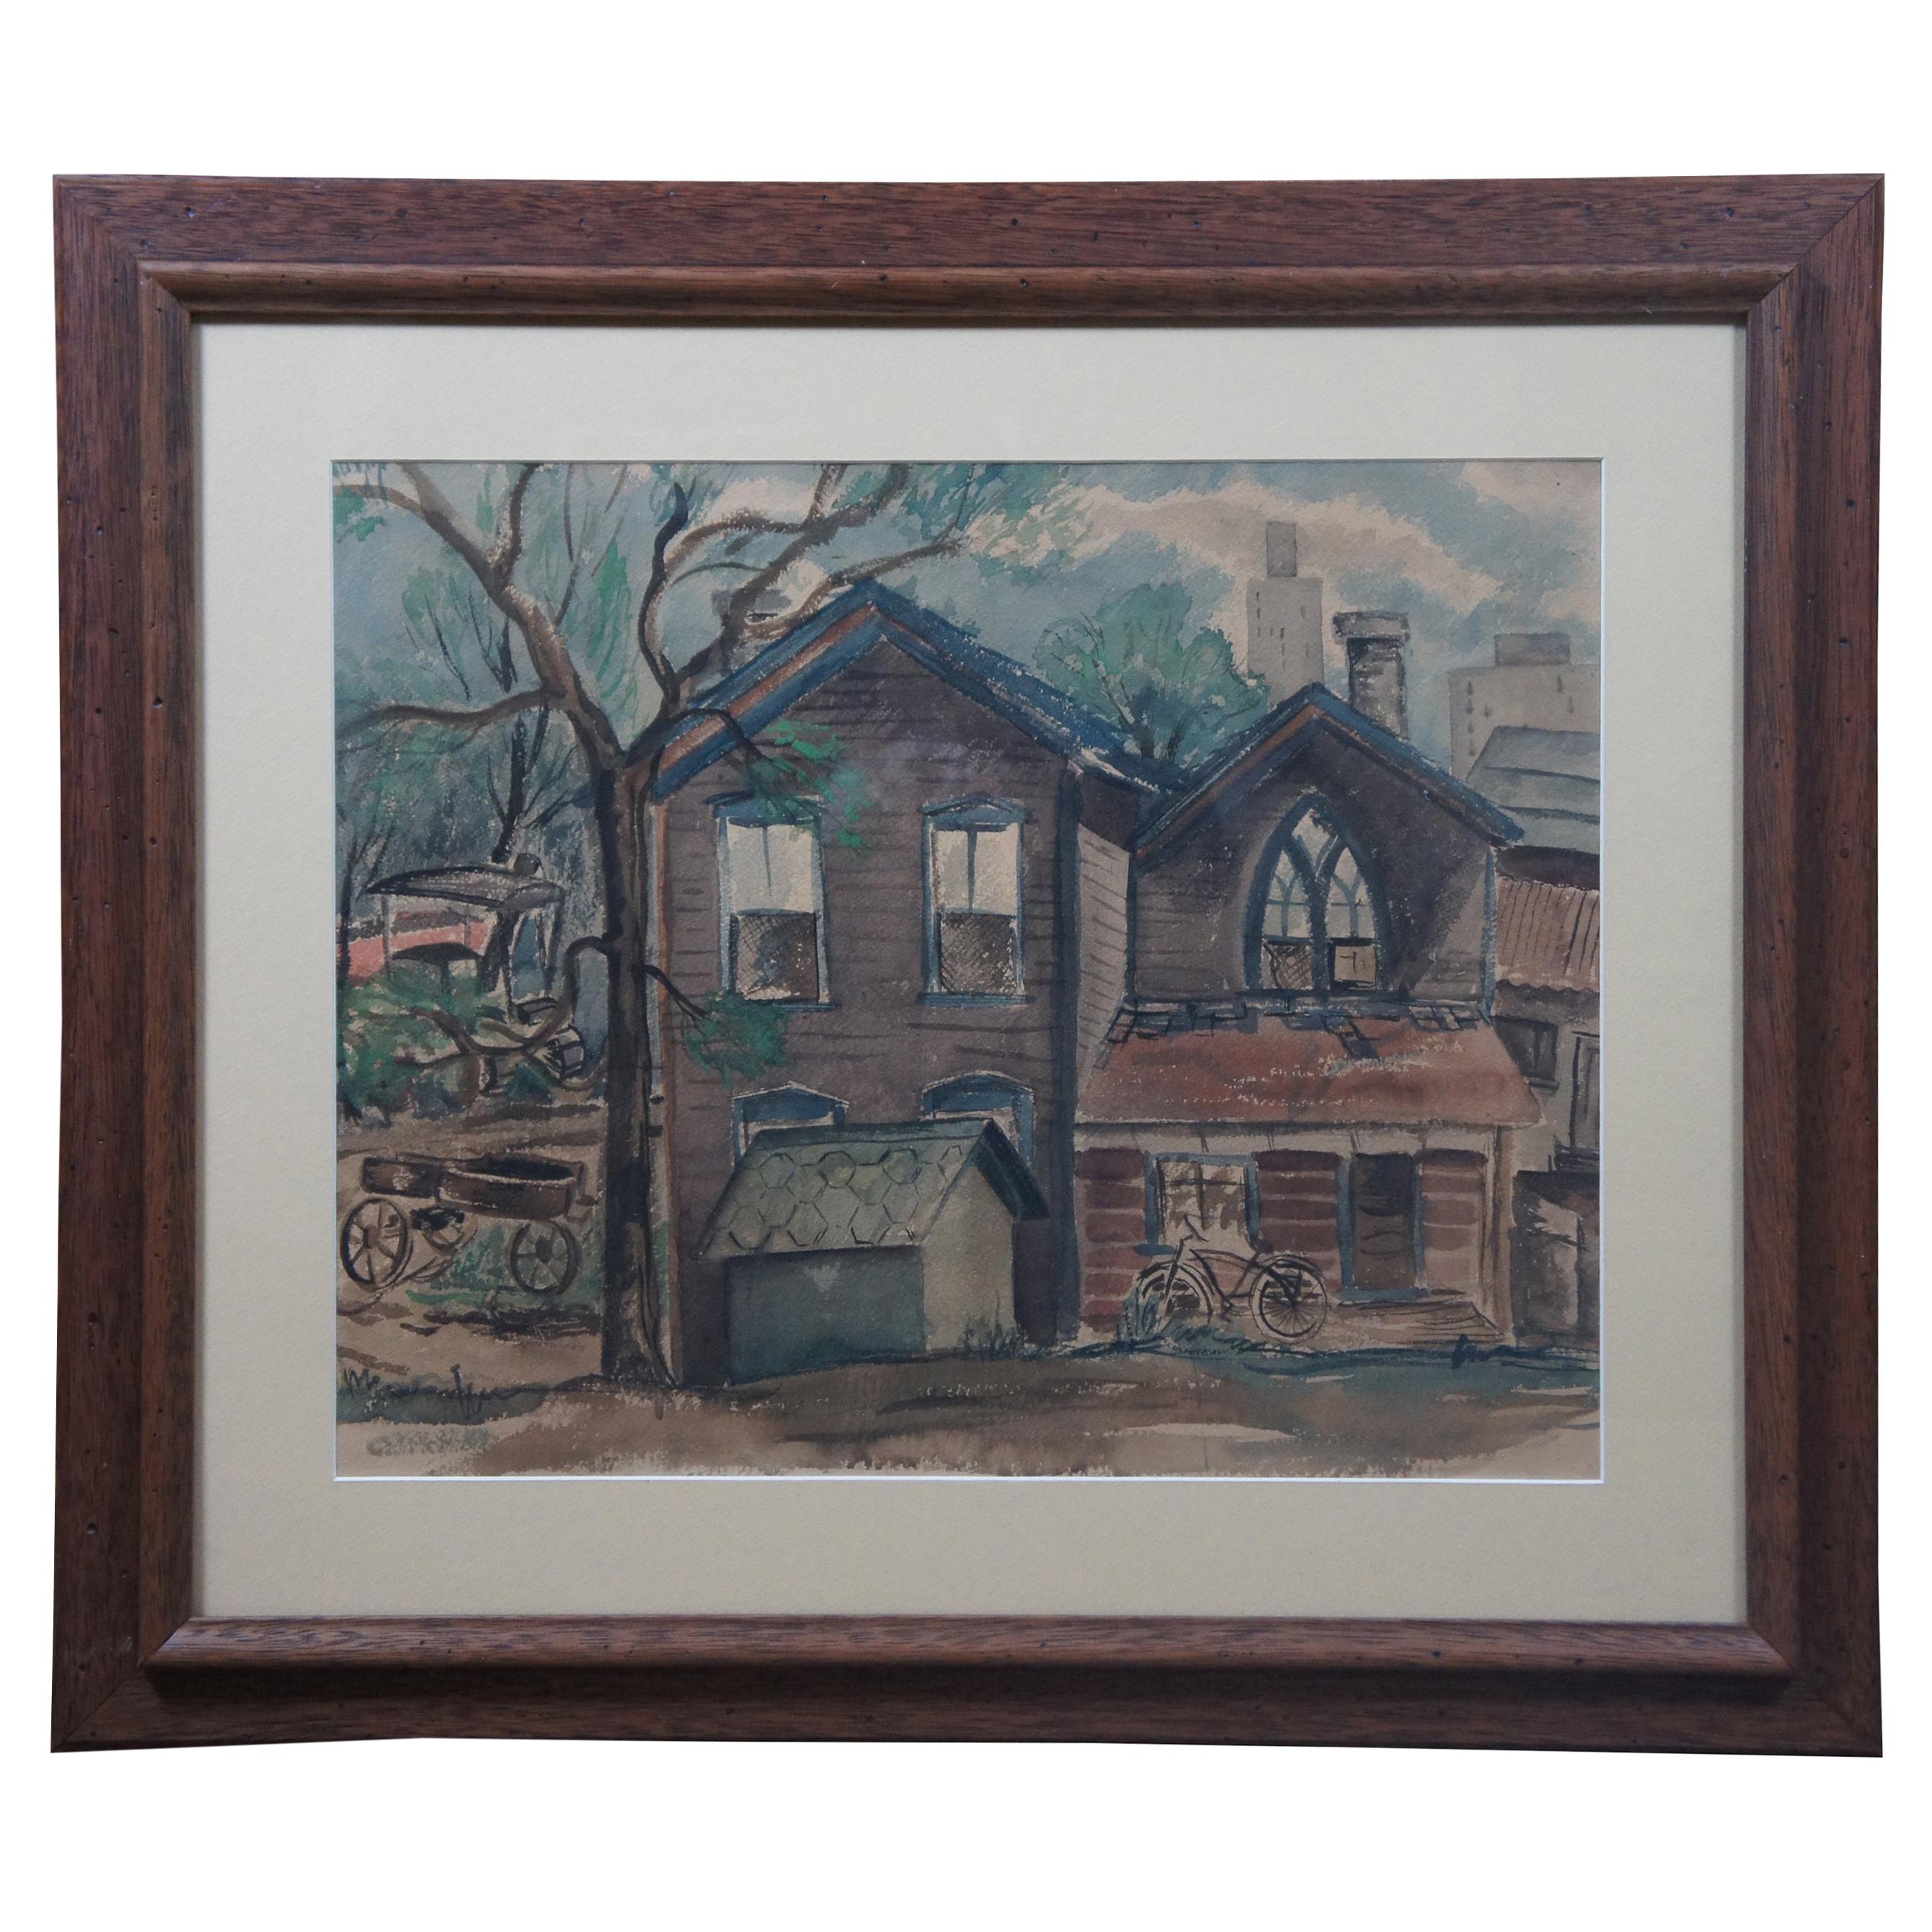 Vintage Original James Yoko Cityscape Watercolor Painting House Farmhouse Wagons